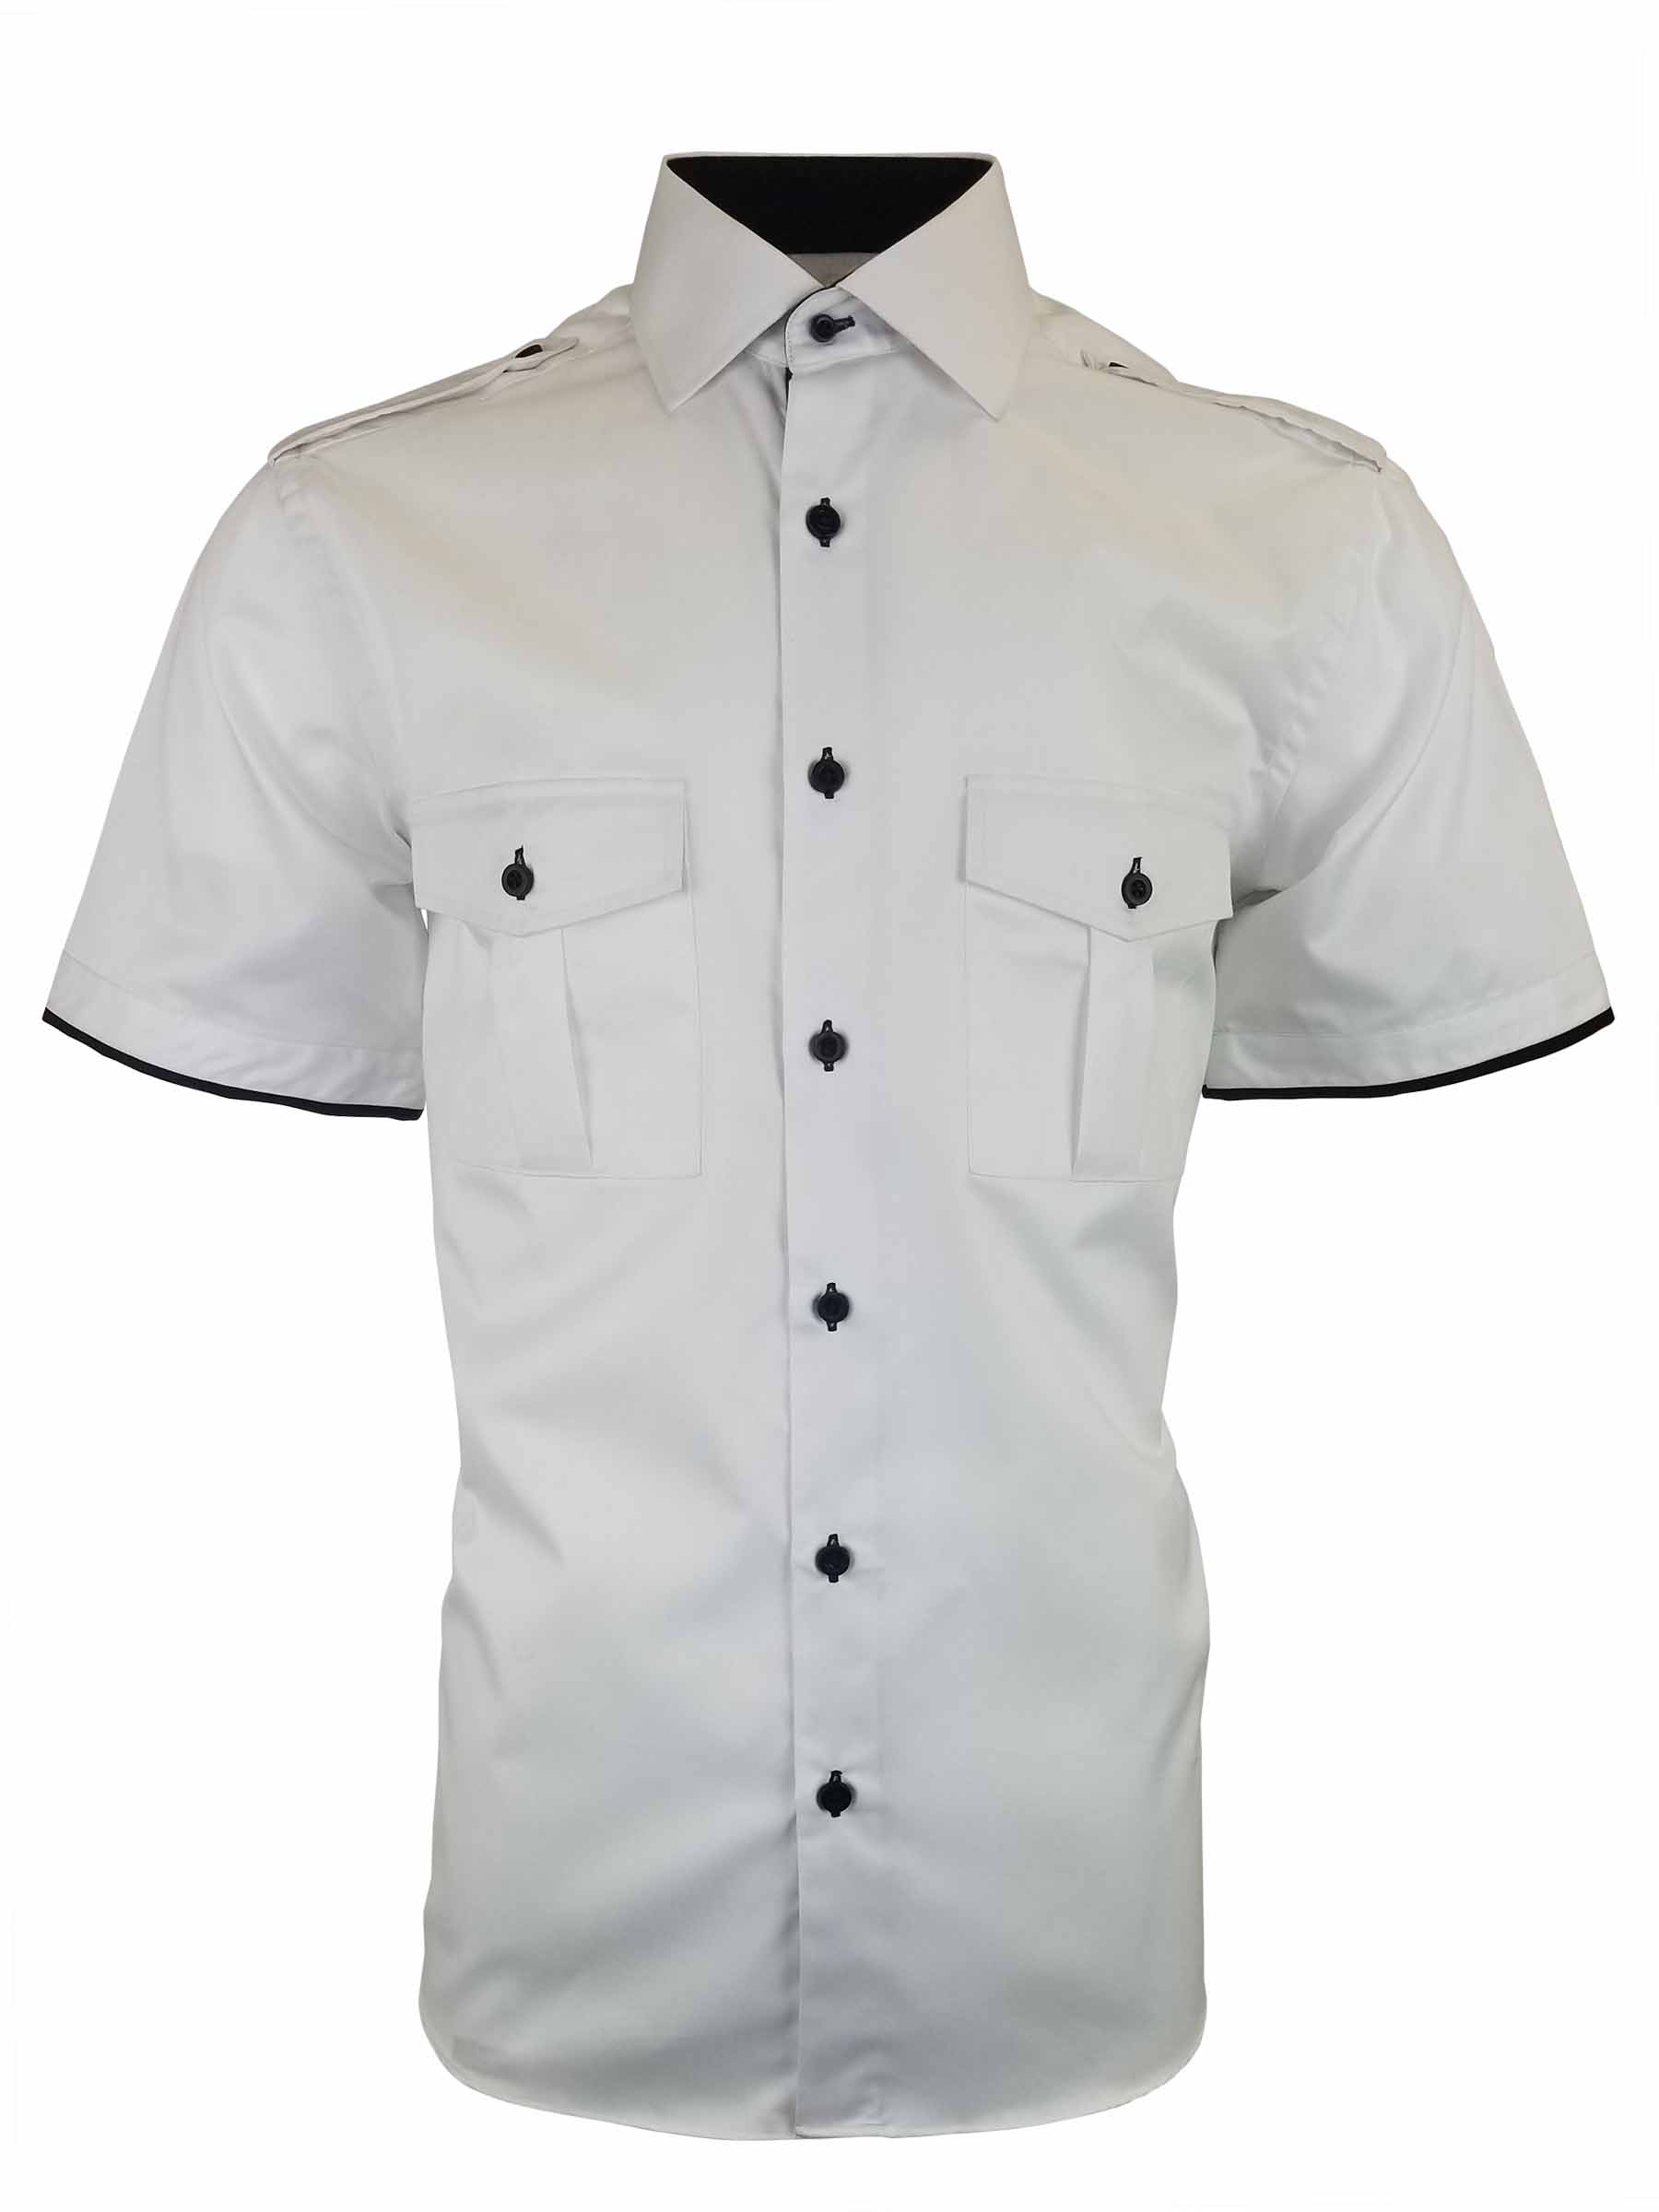 Men's White And Black Contrast Military Shirt - Short Sleeve - Uniform Edit